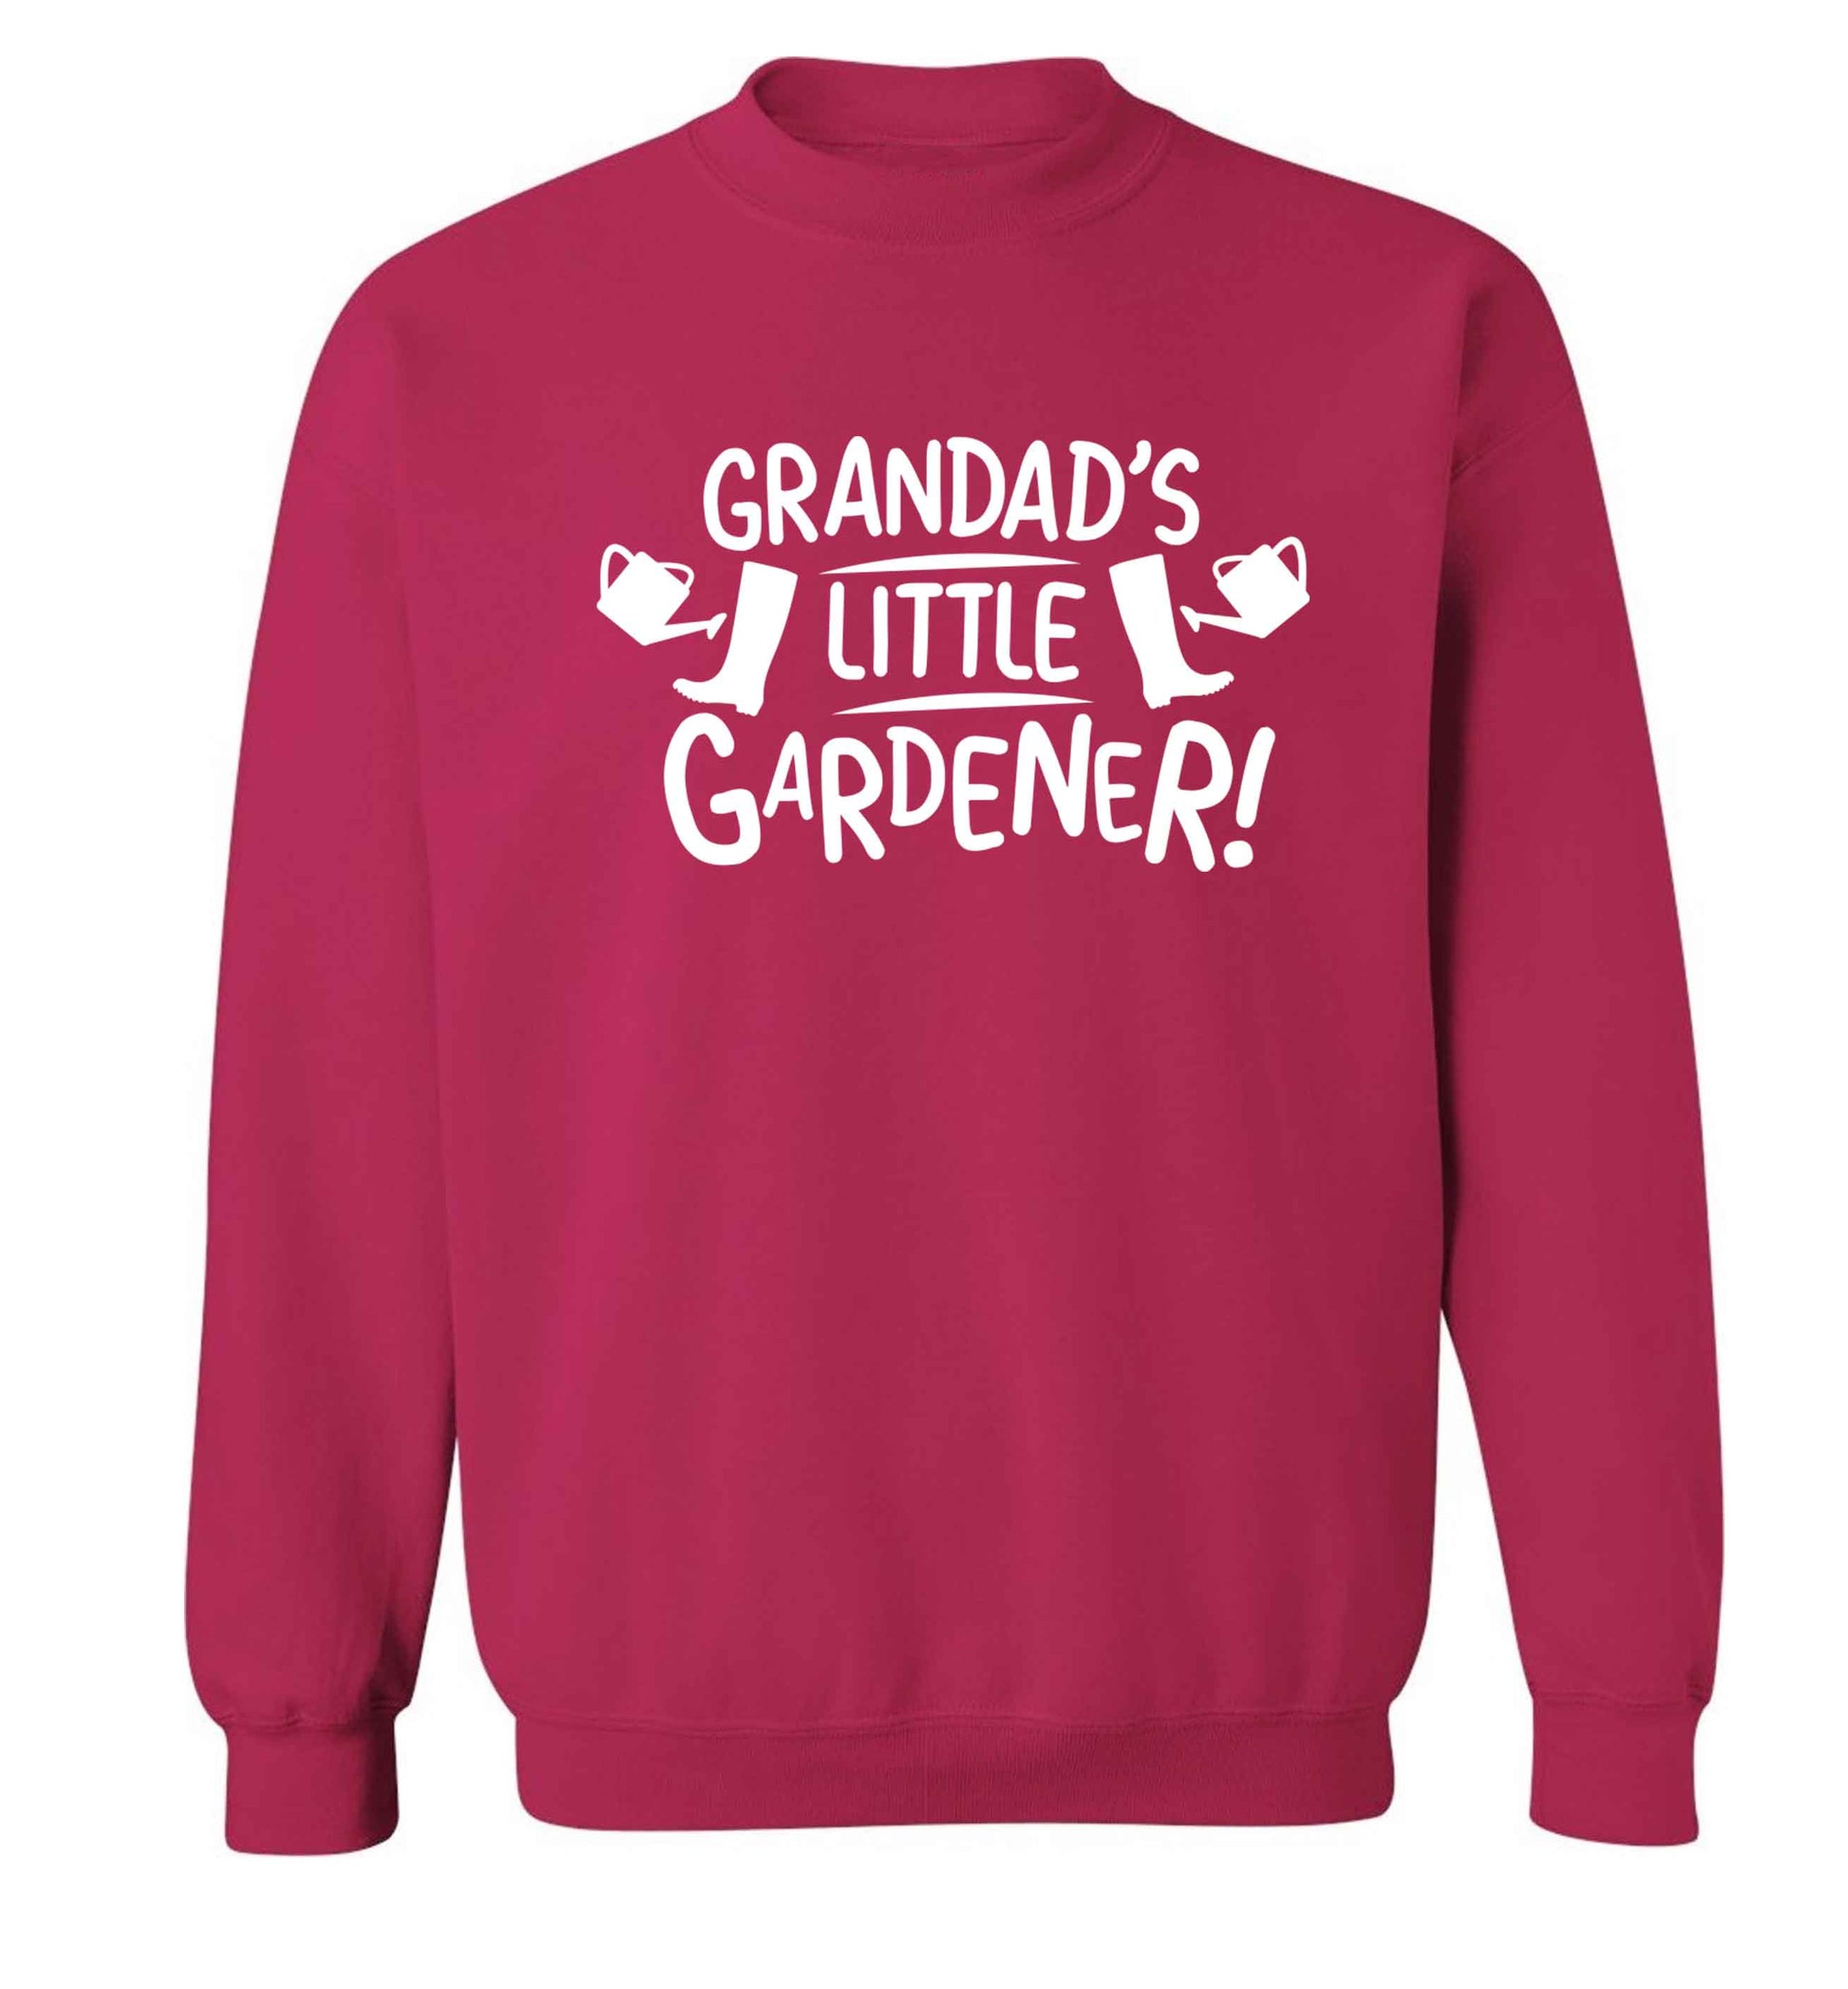 Grandad's little gardener Adult's unisex pink Sweater 2XL